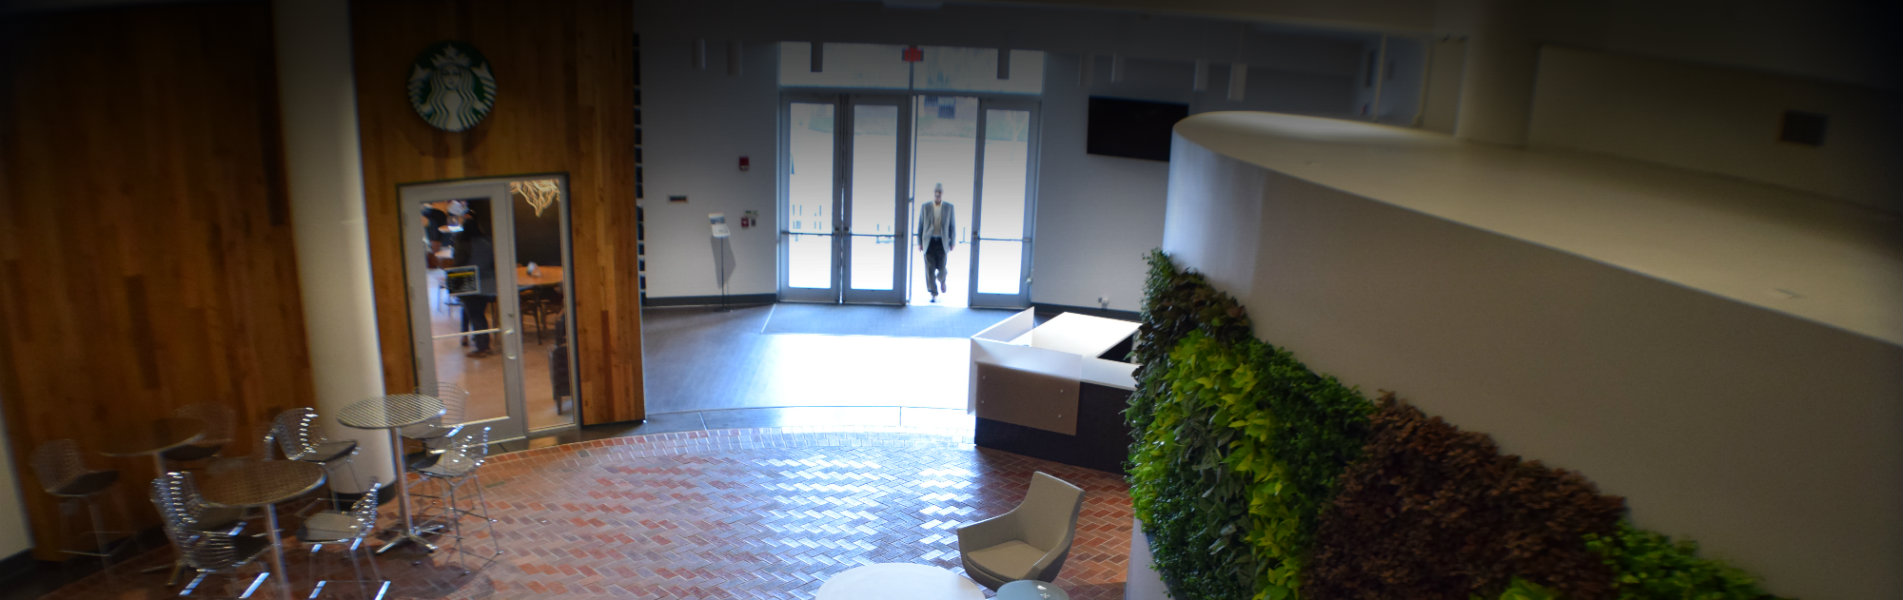 Interior Lobby Entrance of TCC Center for Innovation